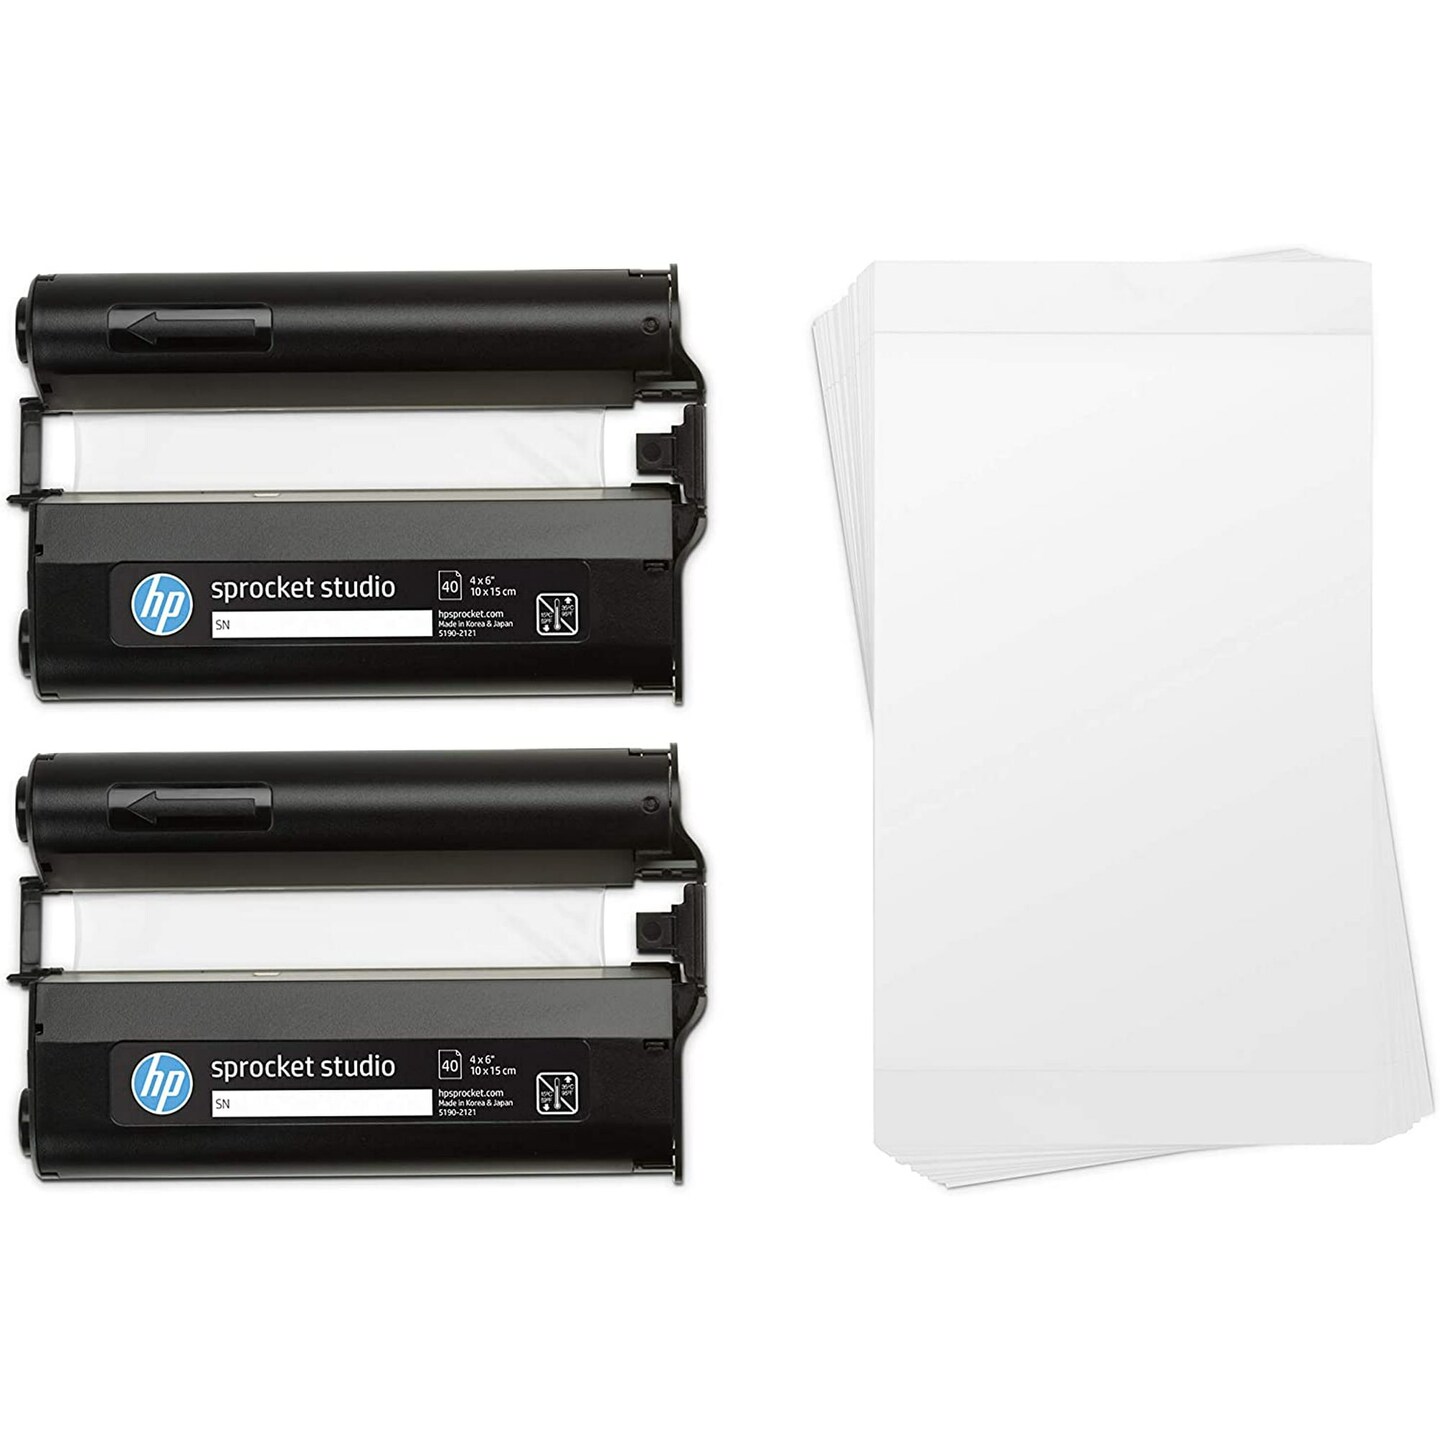 HP Sprocket Studio 4x6 Photo Paper (80 Sheets) &#x26; 2 Cartridges for HP Sprocket Studio Printer